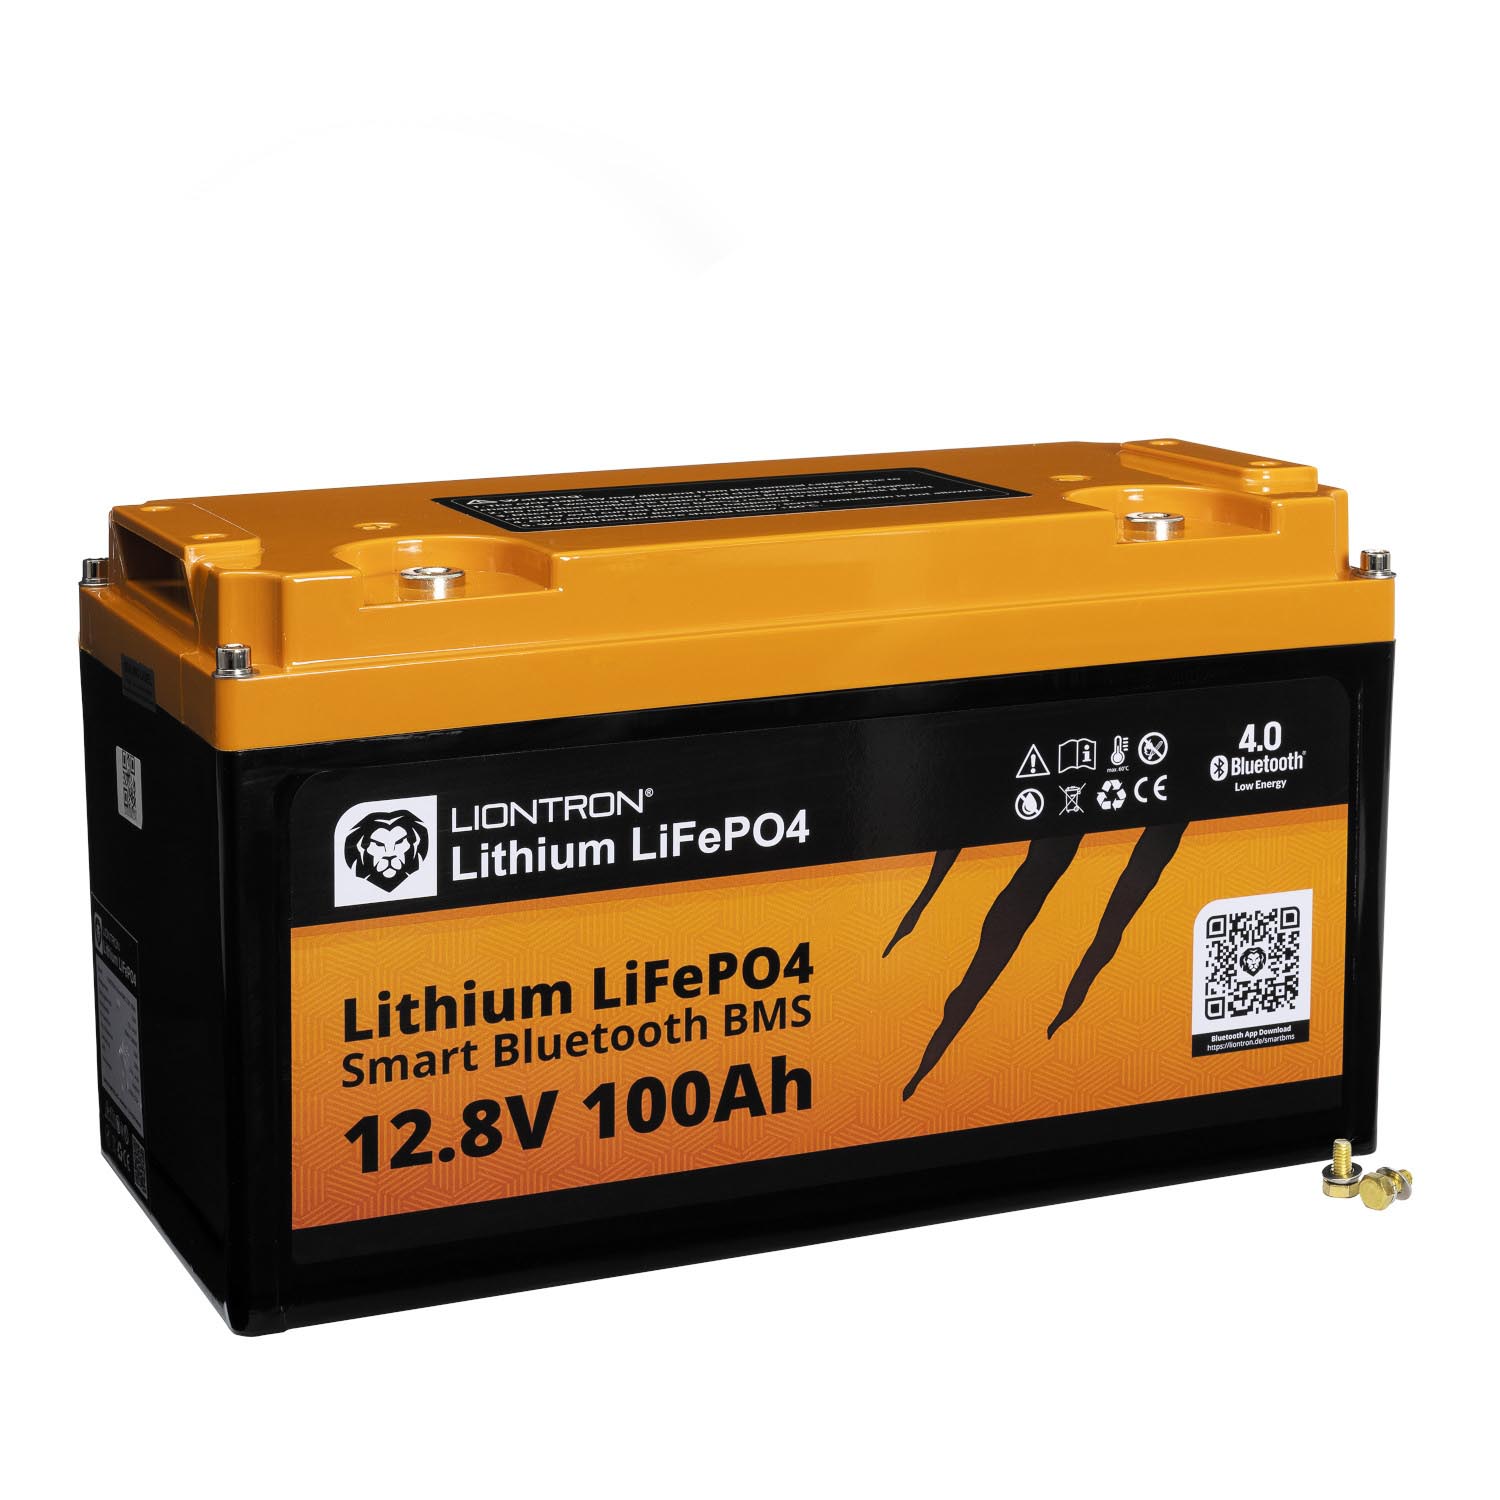 Liontron 100Ah 12V LiFePO4 Lithium Batterie Wohnmobil BMS mit App  (USt-befreit nach §12 Abs.3 Nr. 1 S.1 UStG), 0% MwSt.